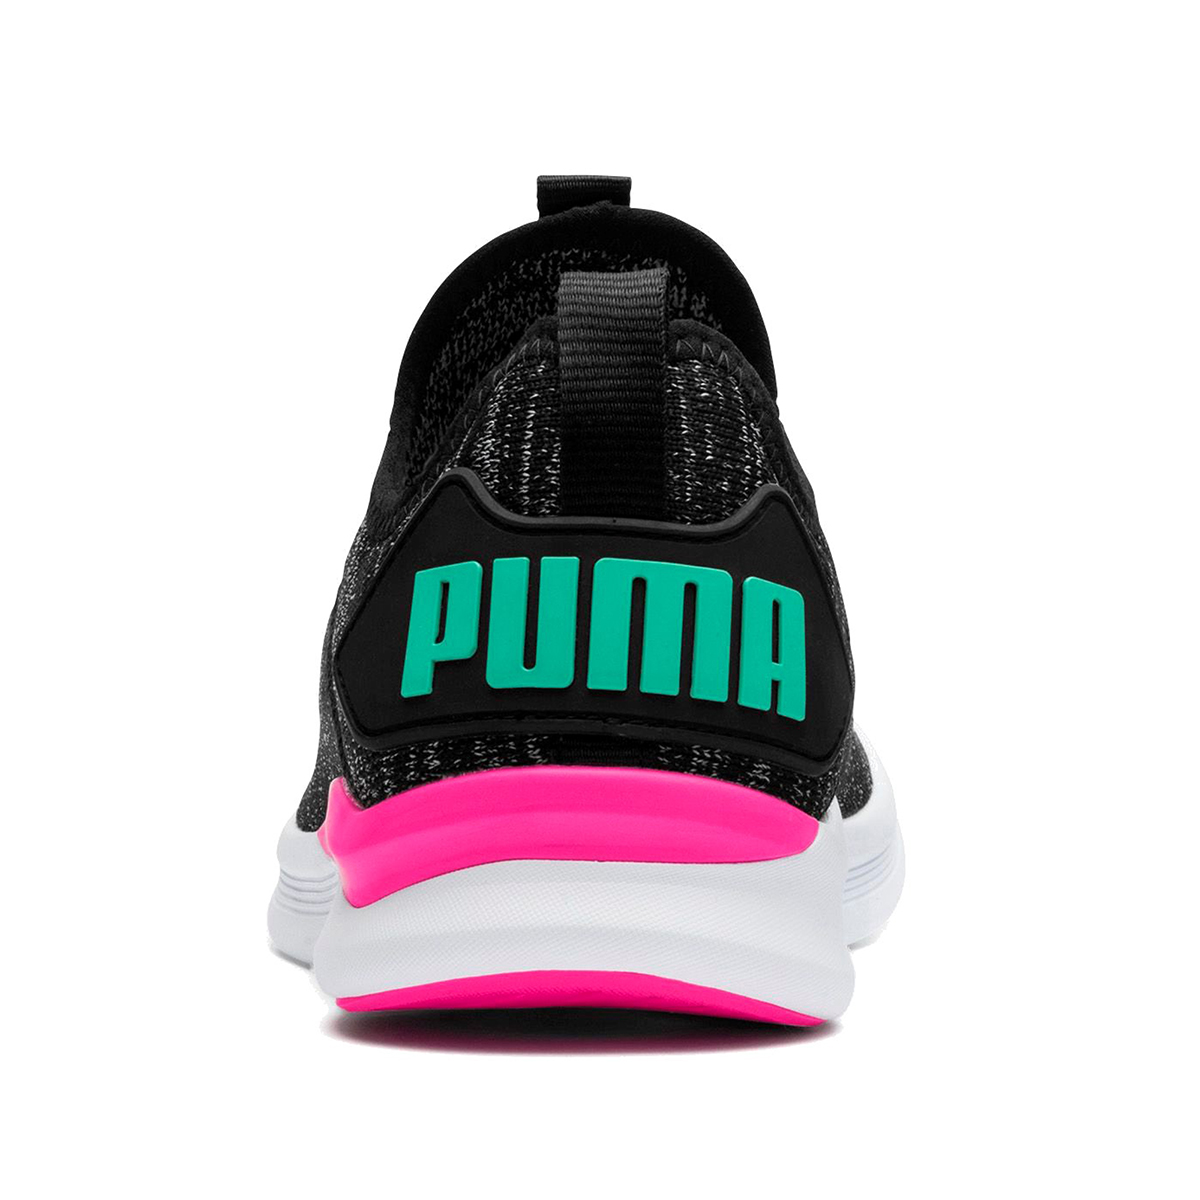 Puma Ignite Flash evoKNIT Joggingschuhe Damen Fitnessschuhe black 190511 11